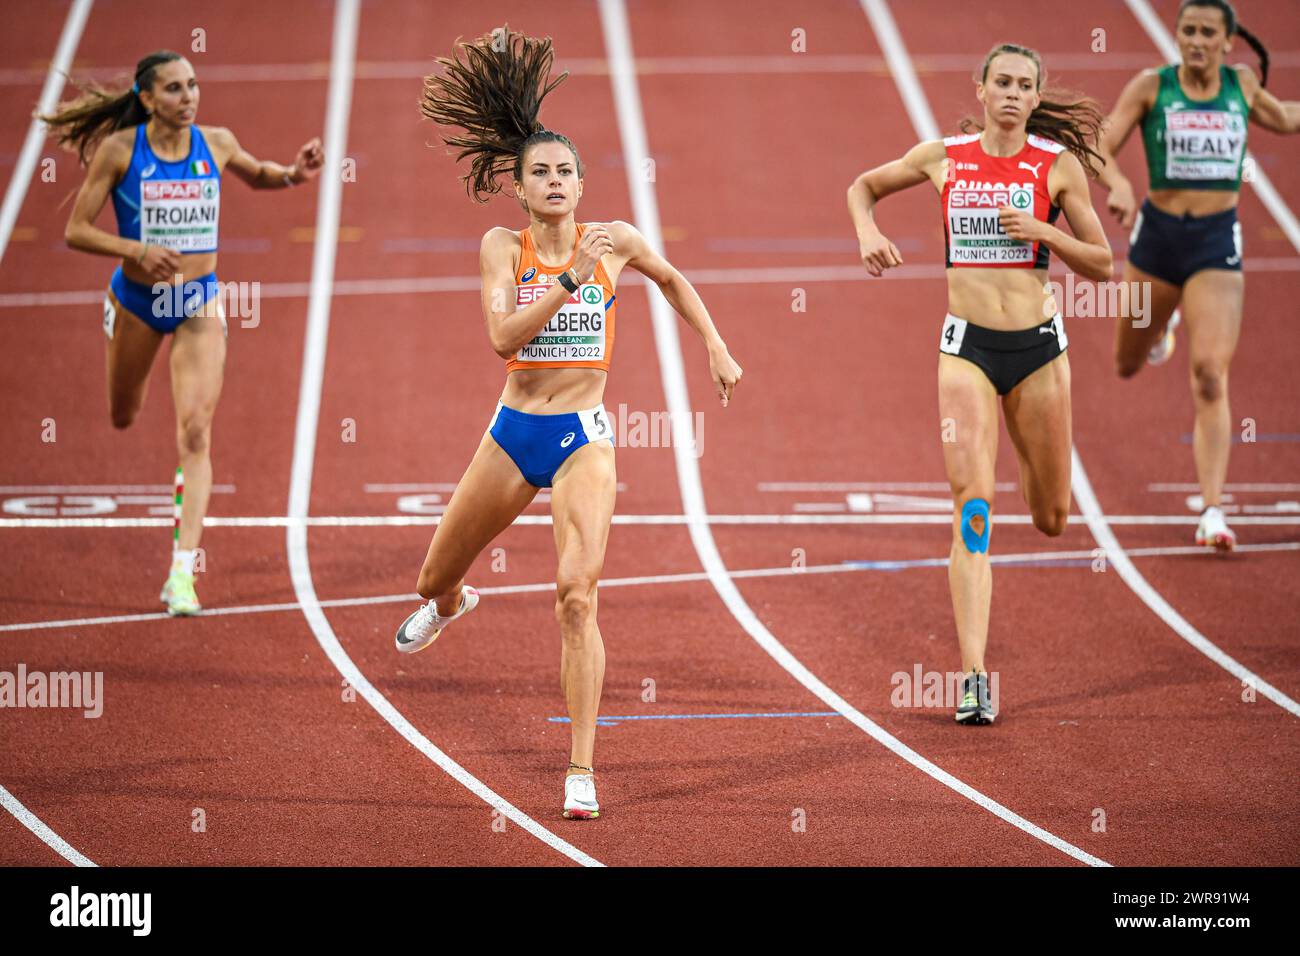 Eveline Saalberg (Paesi Bassi), Silke Lemmens (Svizzera). riscaldatori da 400 m. Campionati europei di Monaco 2022 Foto Stock